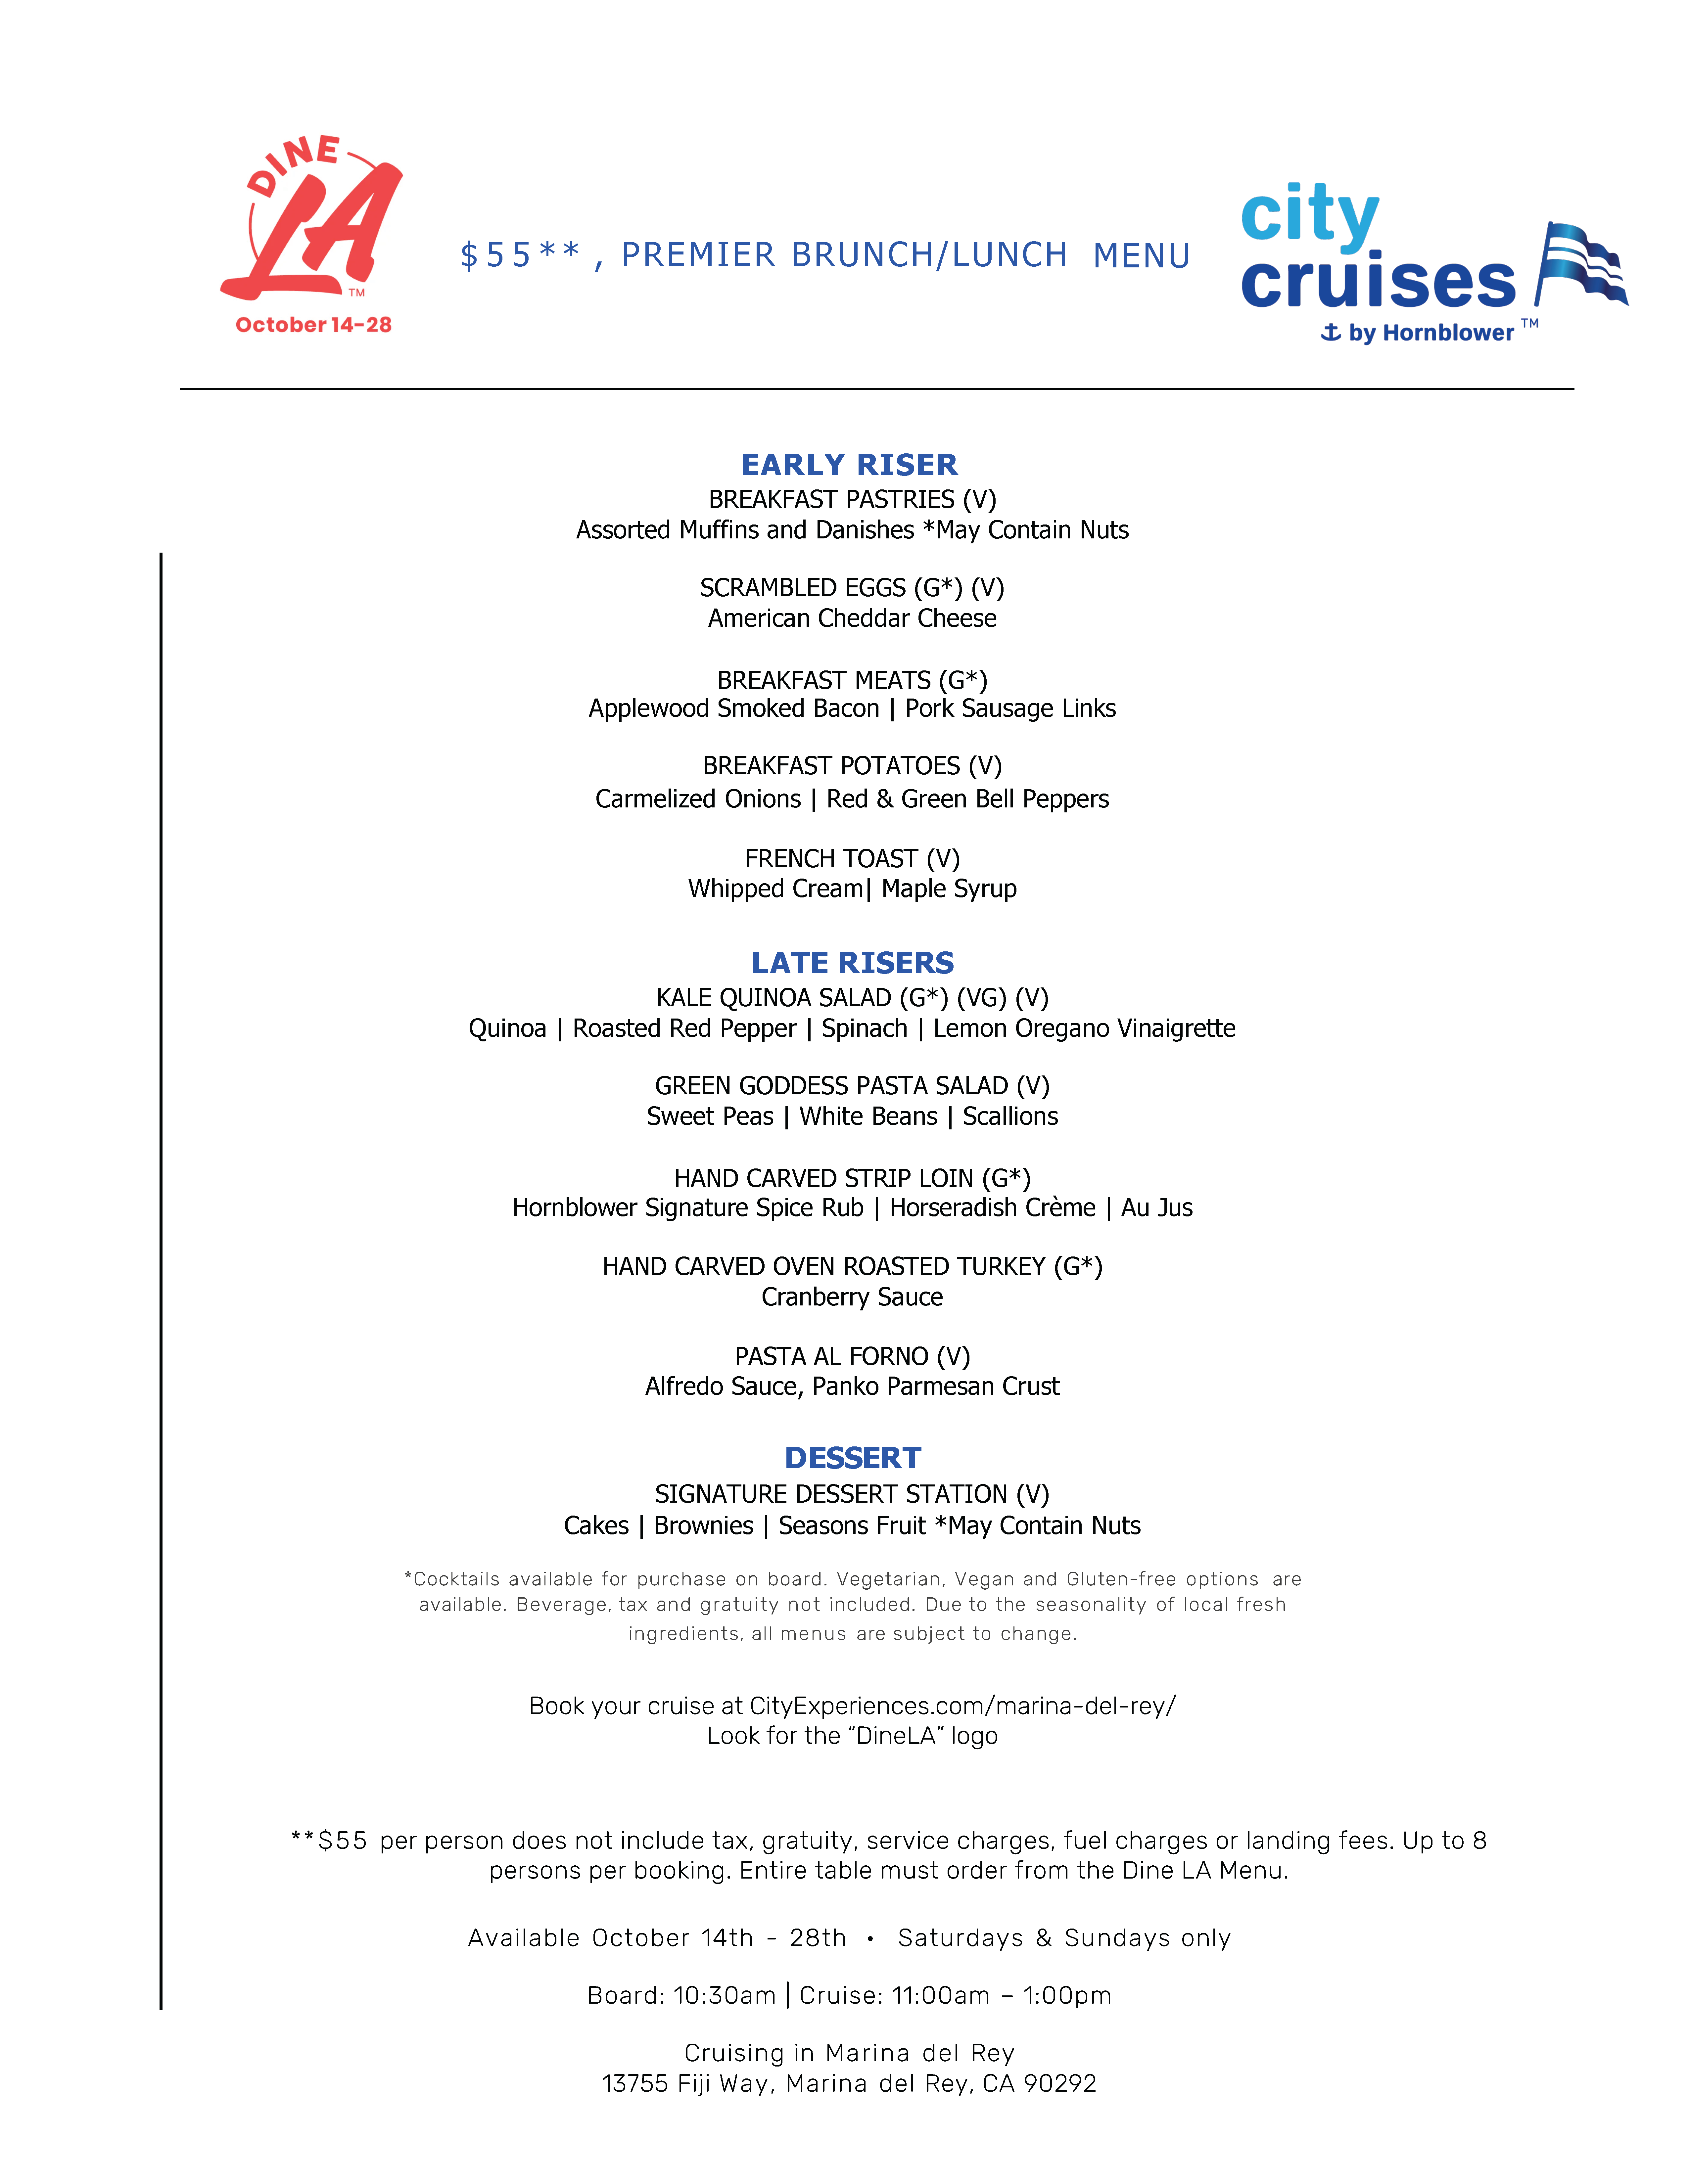 hornblower cruise menu